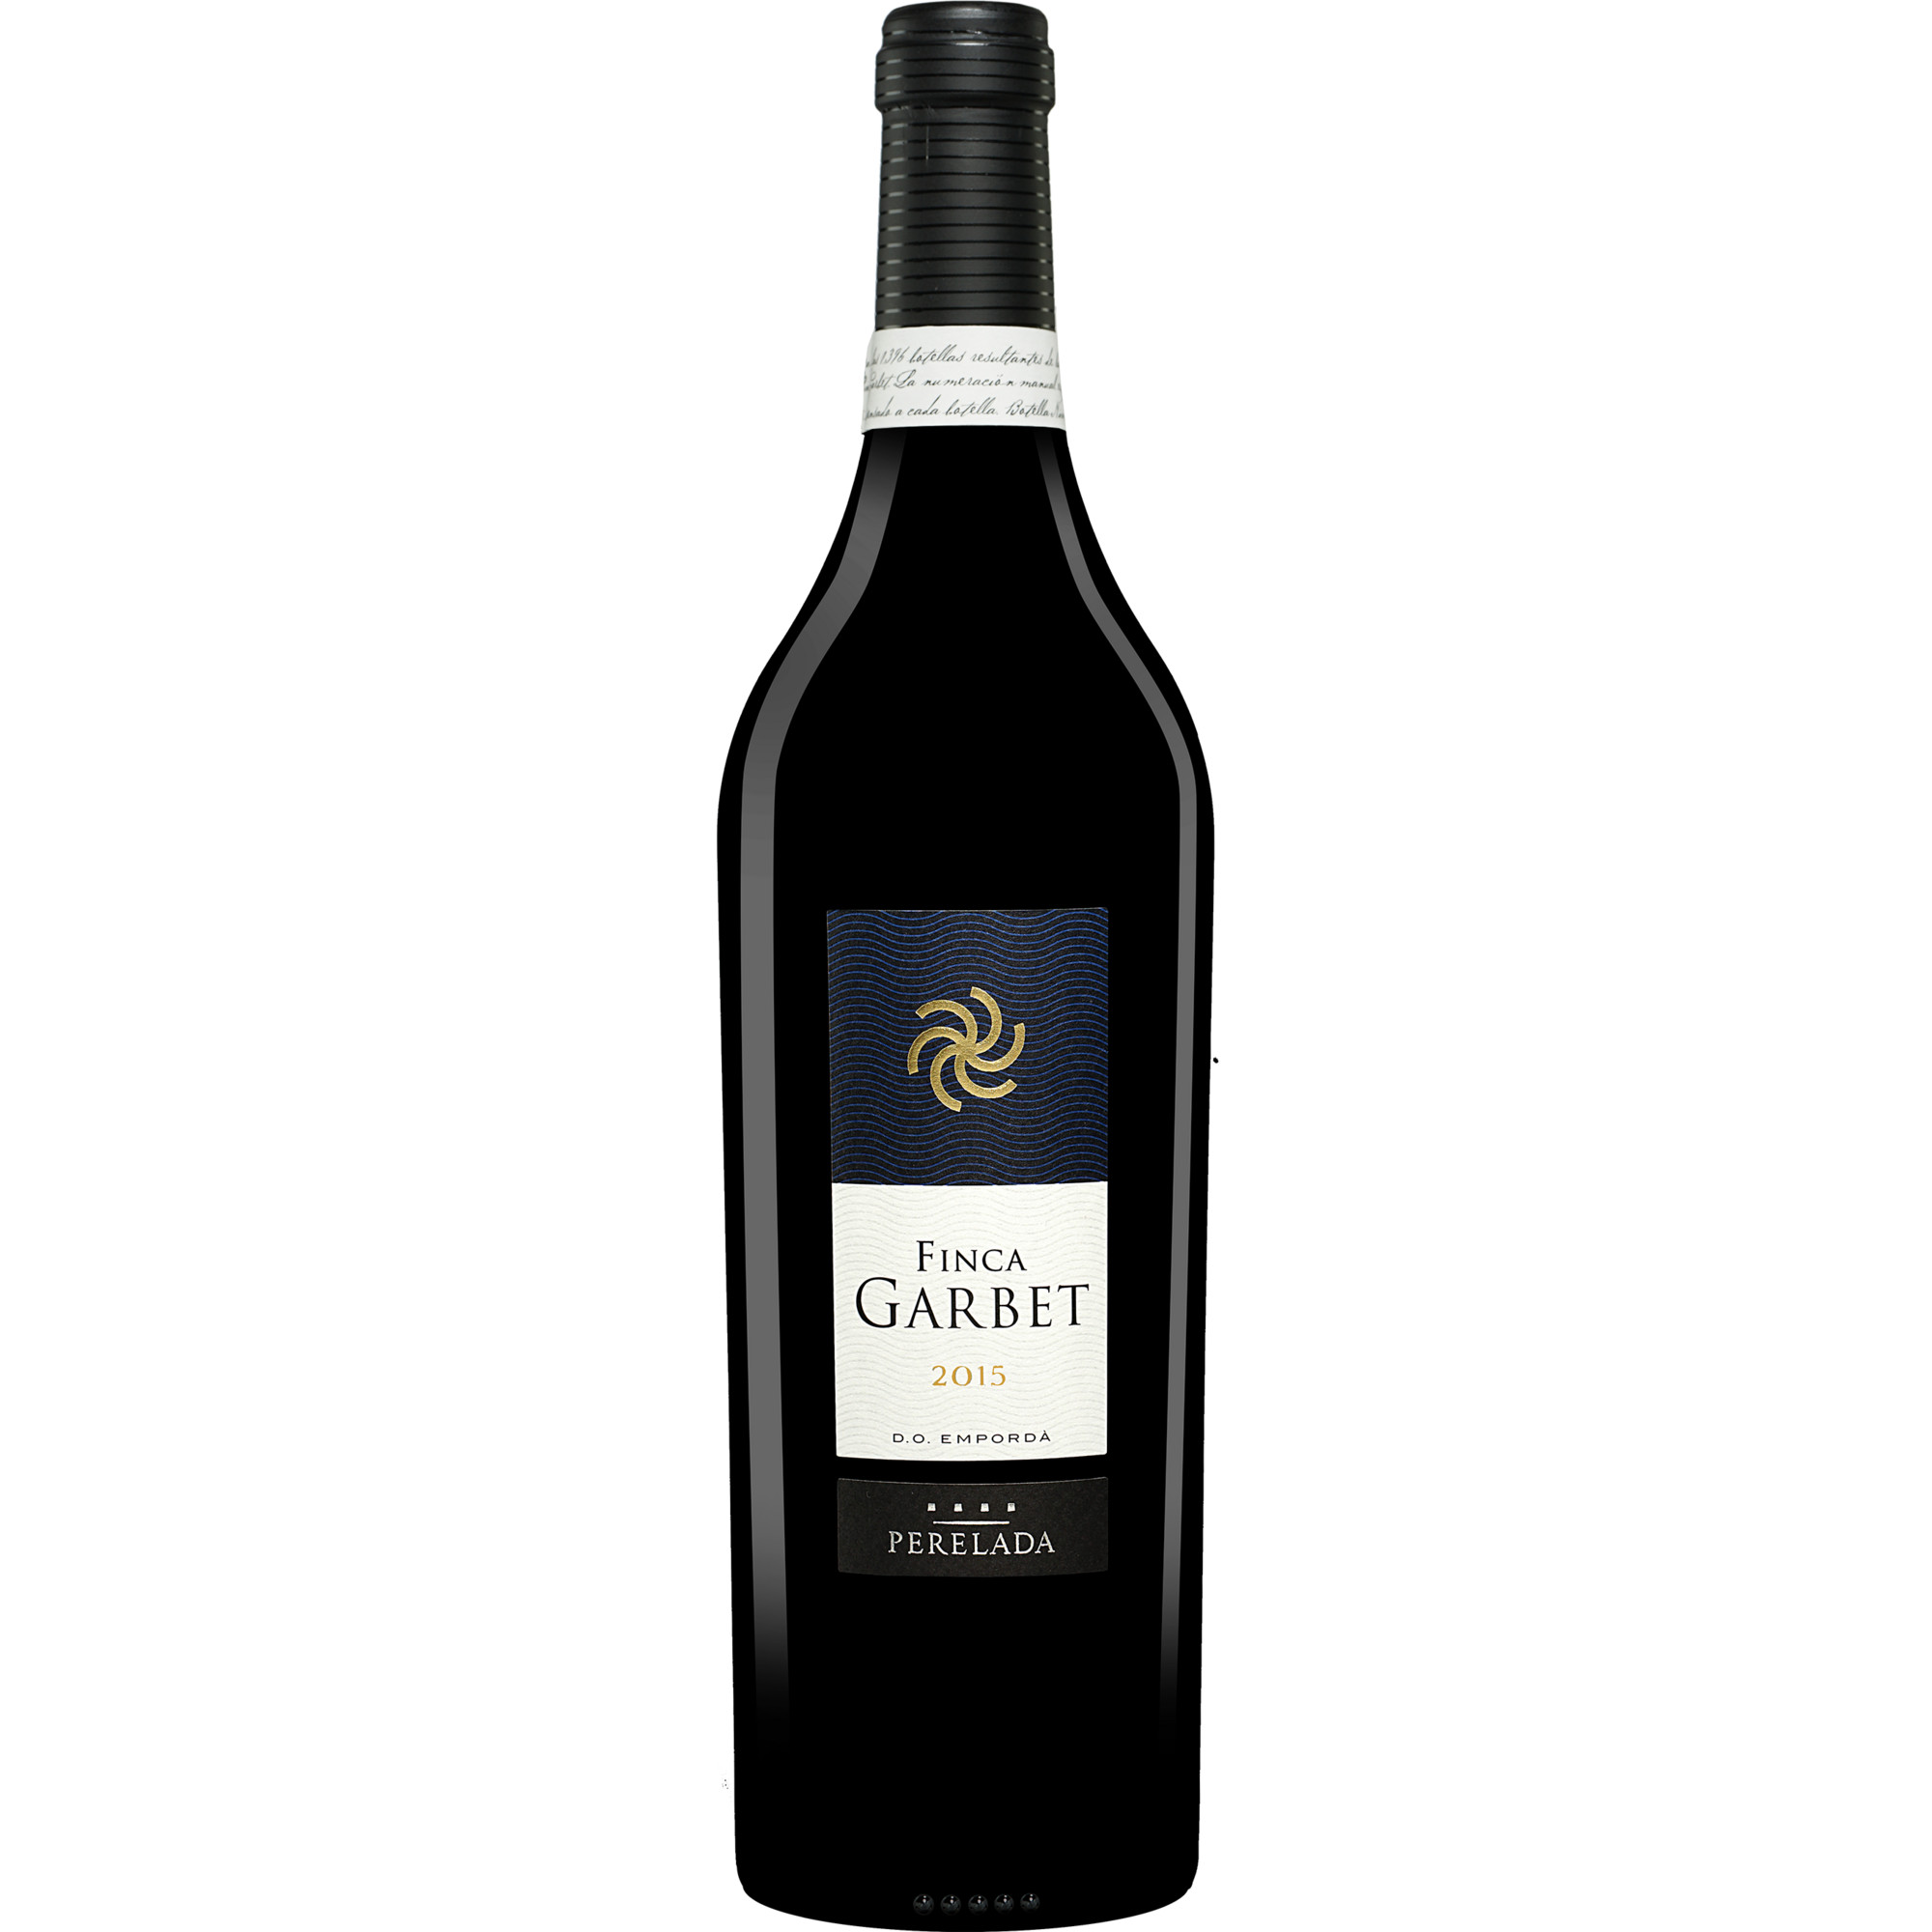 Castillo Perelada »Finca Garbet« 2015  014.5% Vol. Rotwein Trocken aus Spanien